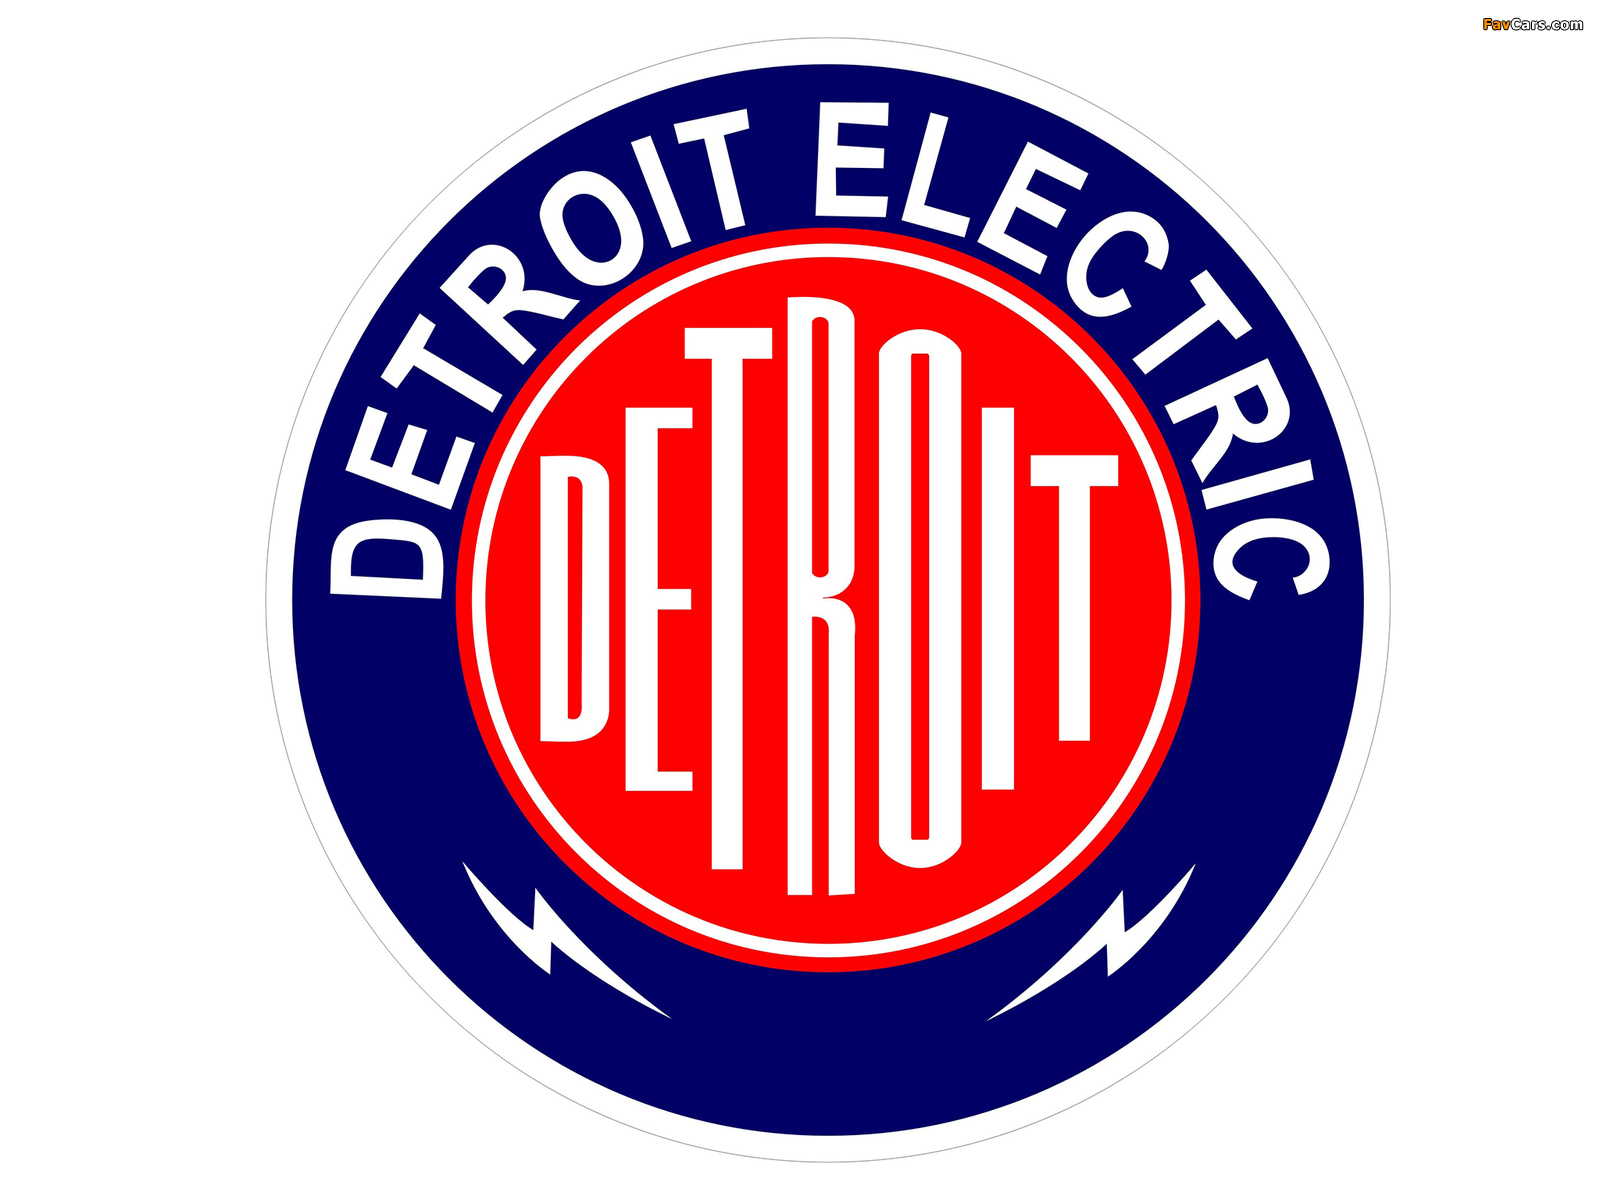 Detroit Electric pictures (1600 x 1200)